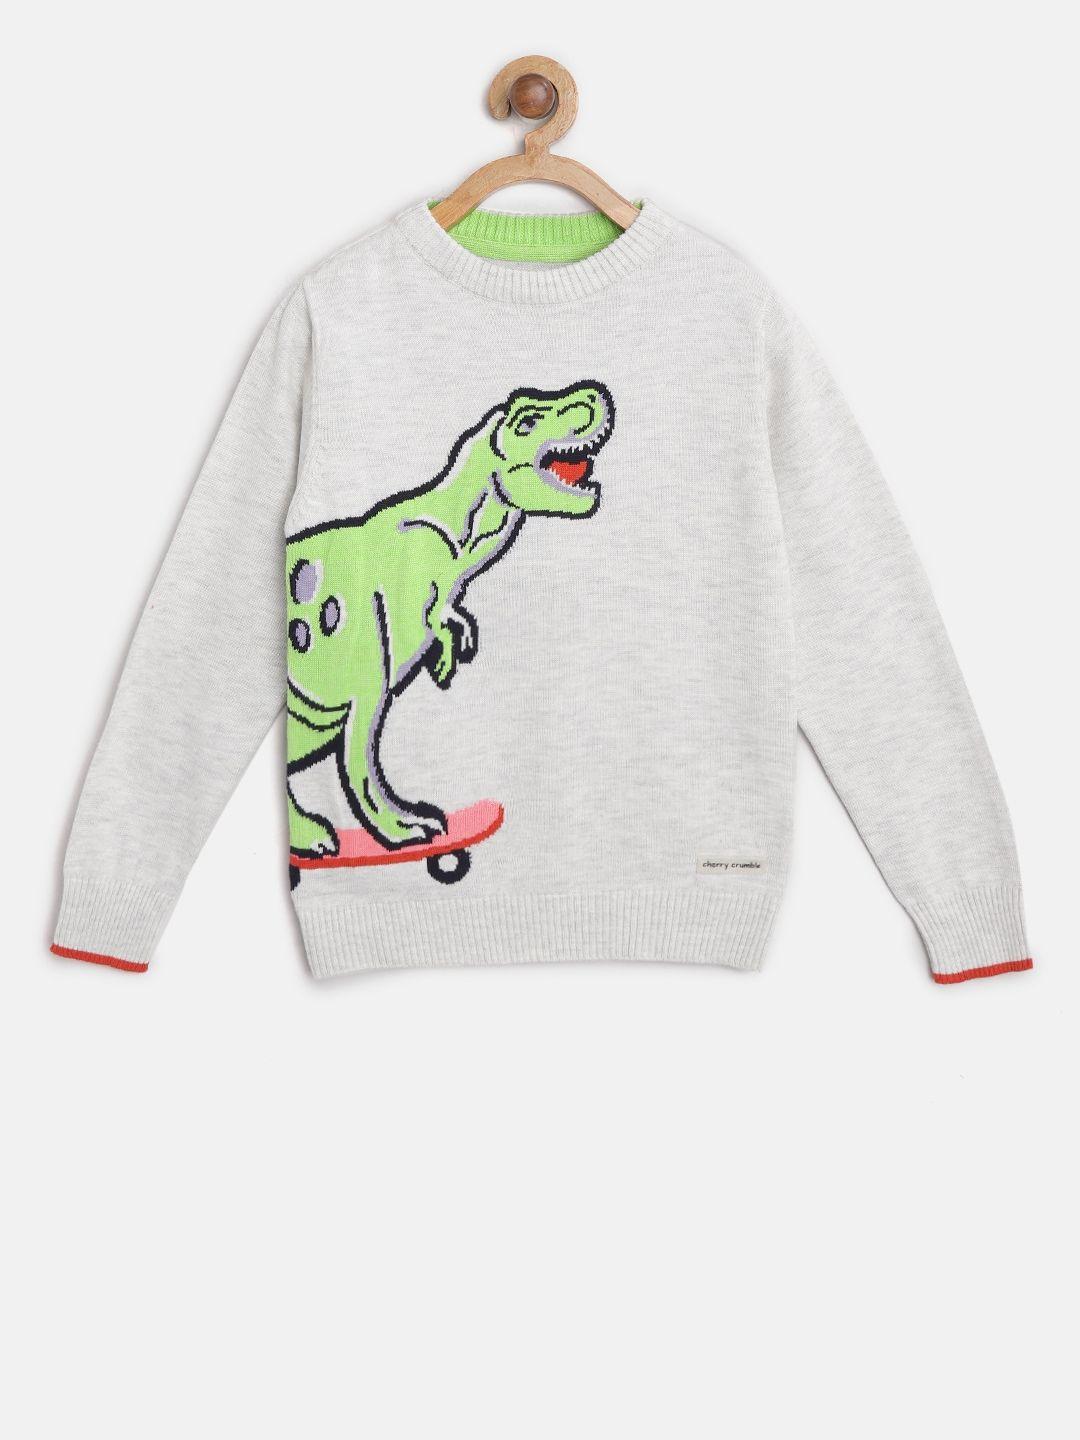 cherry crumble unisex kids grey melange & green printed sweater